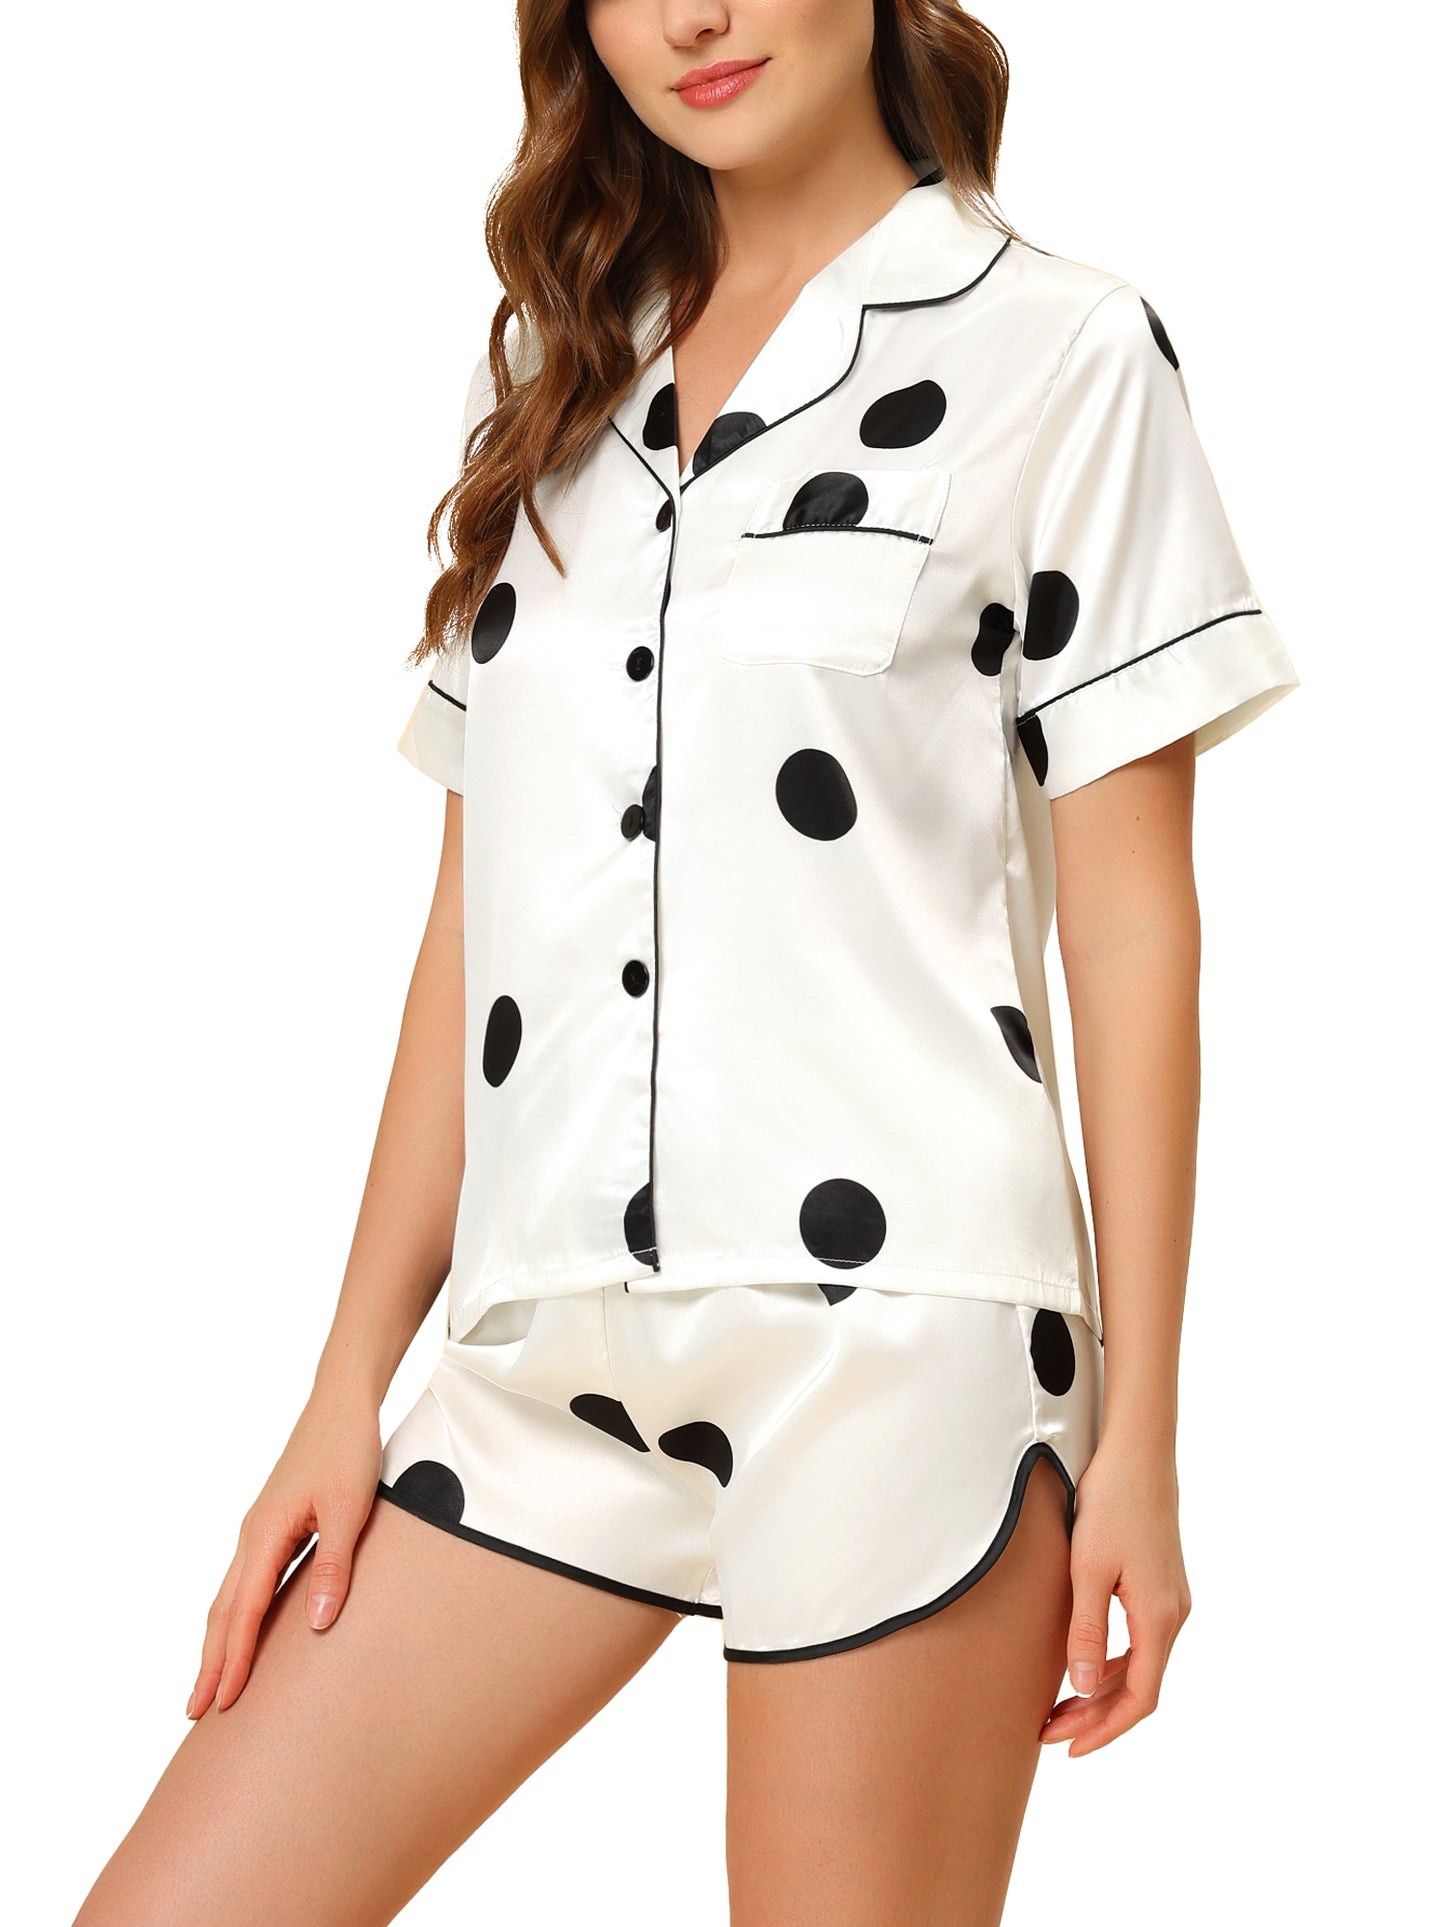 cheibear Satin 2pcs Lounge Sleepwear T-Shirt and Shorts Polka Dots Pajama Sets White